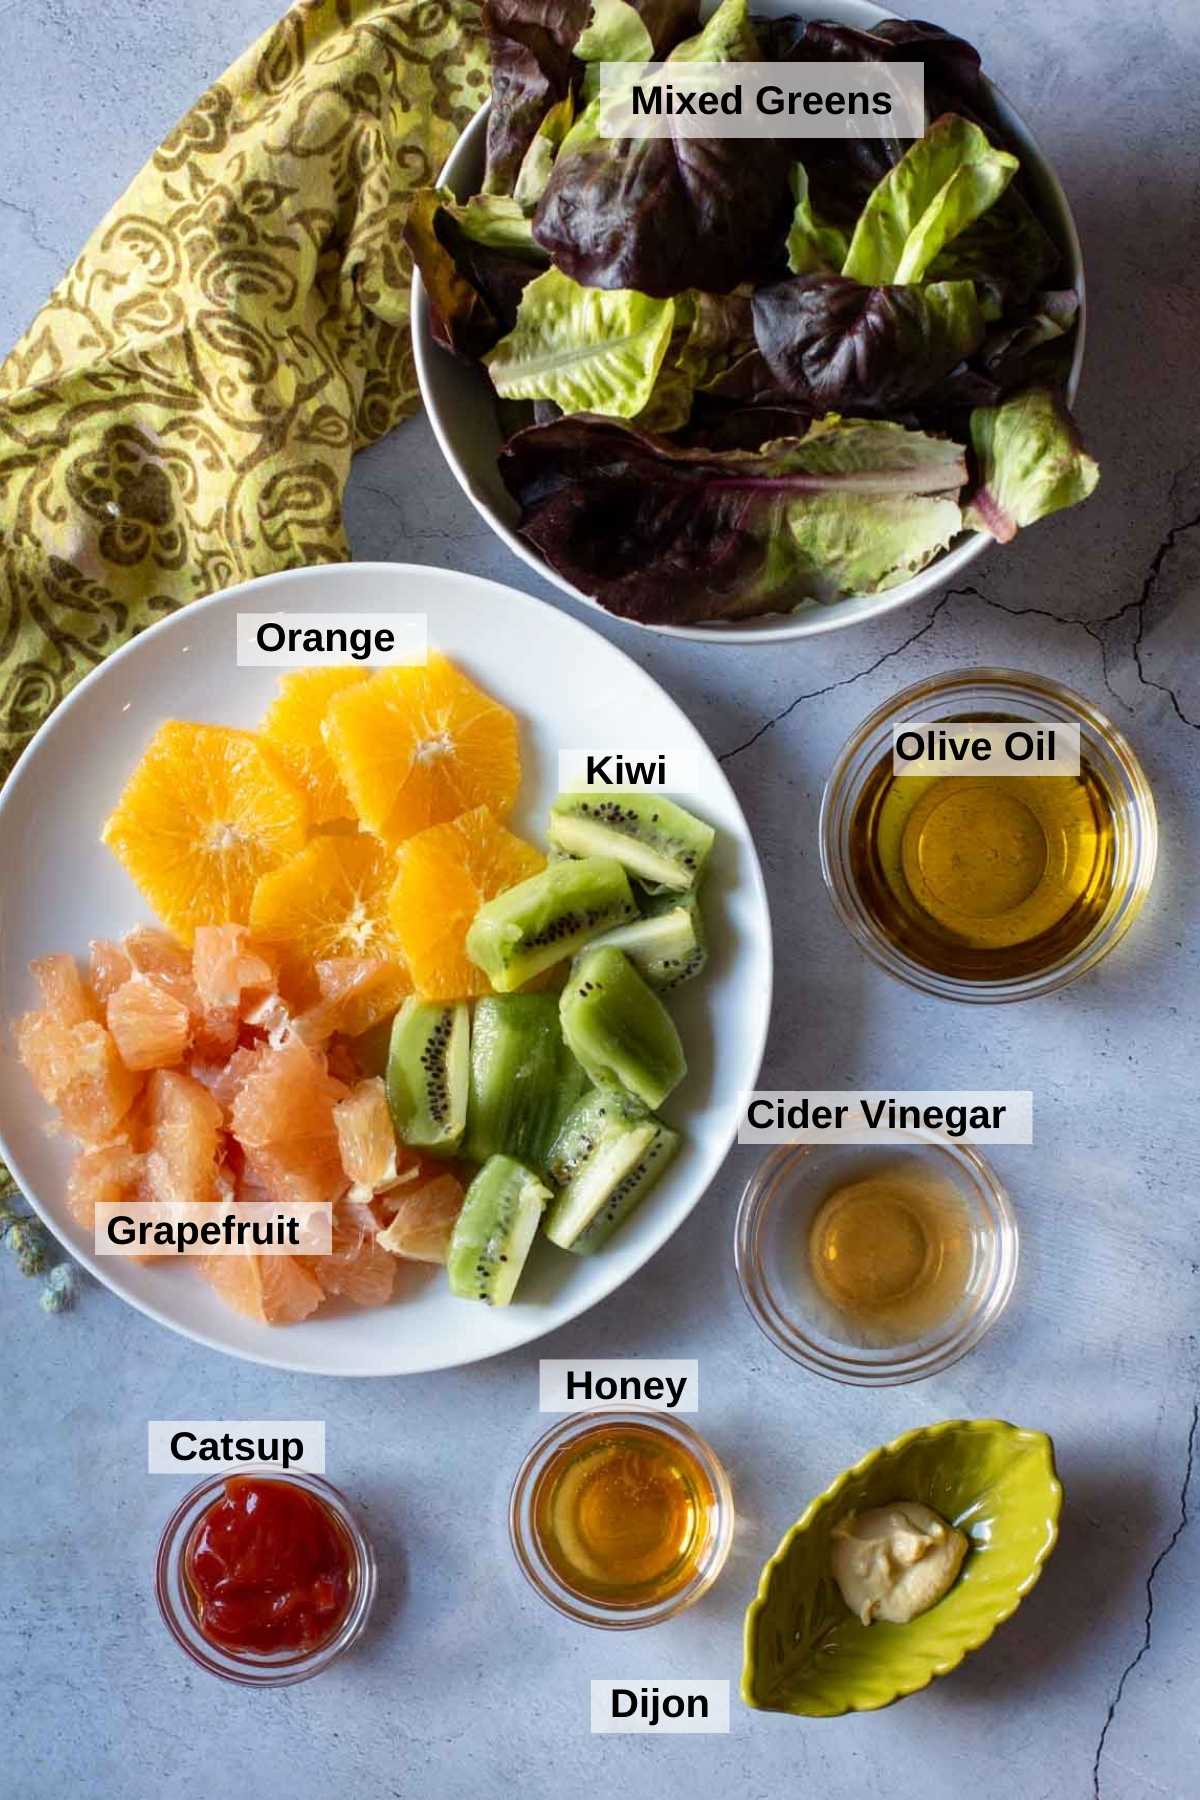 Ingredients to make citrus salad and citrus salad dressing.